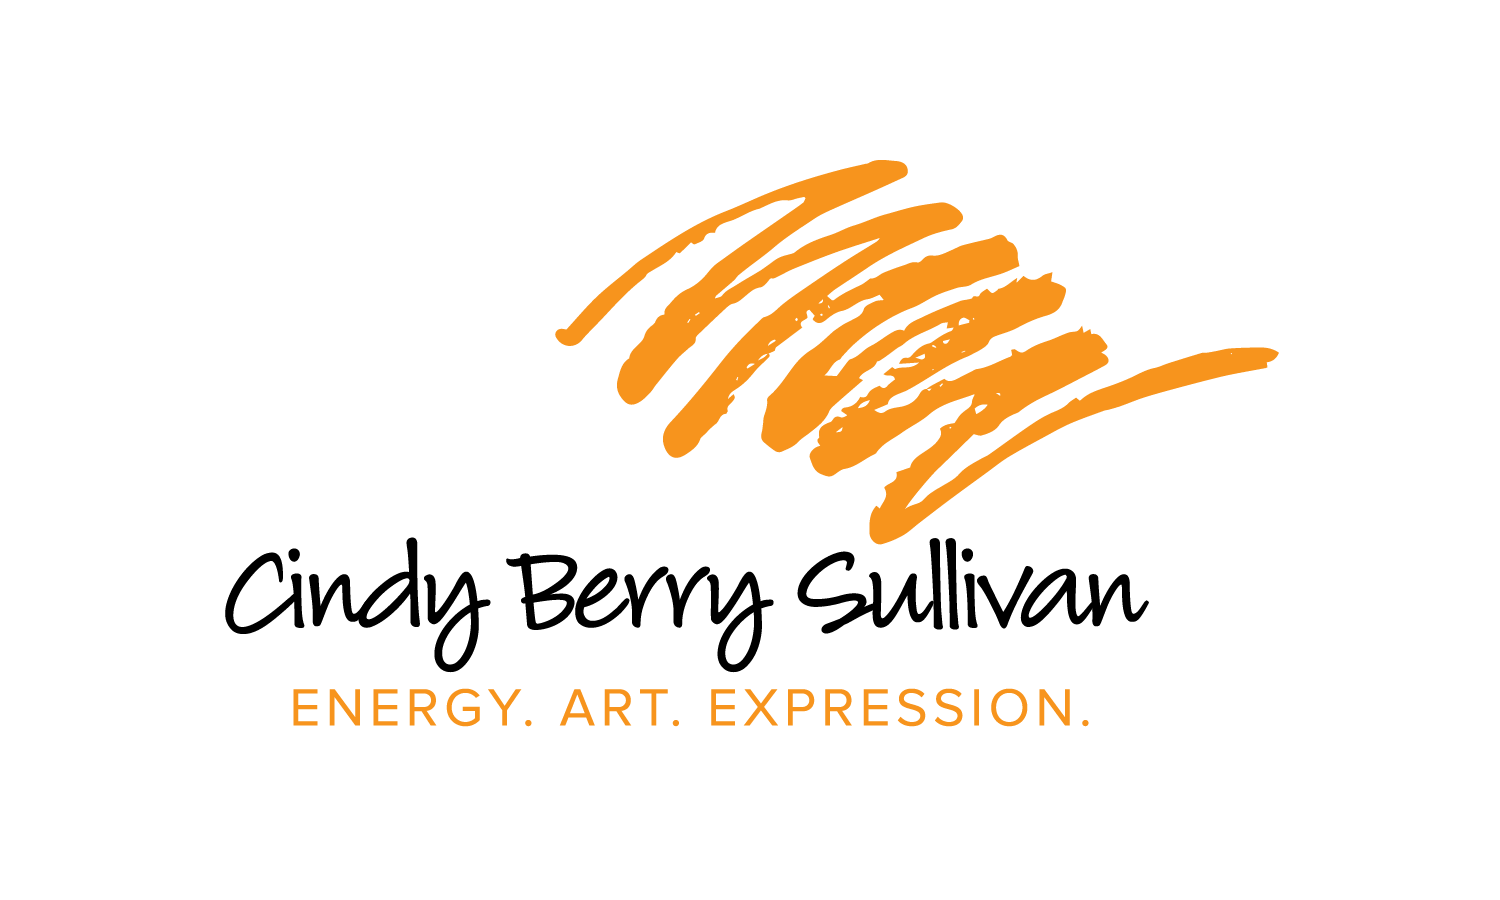 Cindy Berry Sullivan